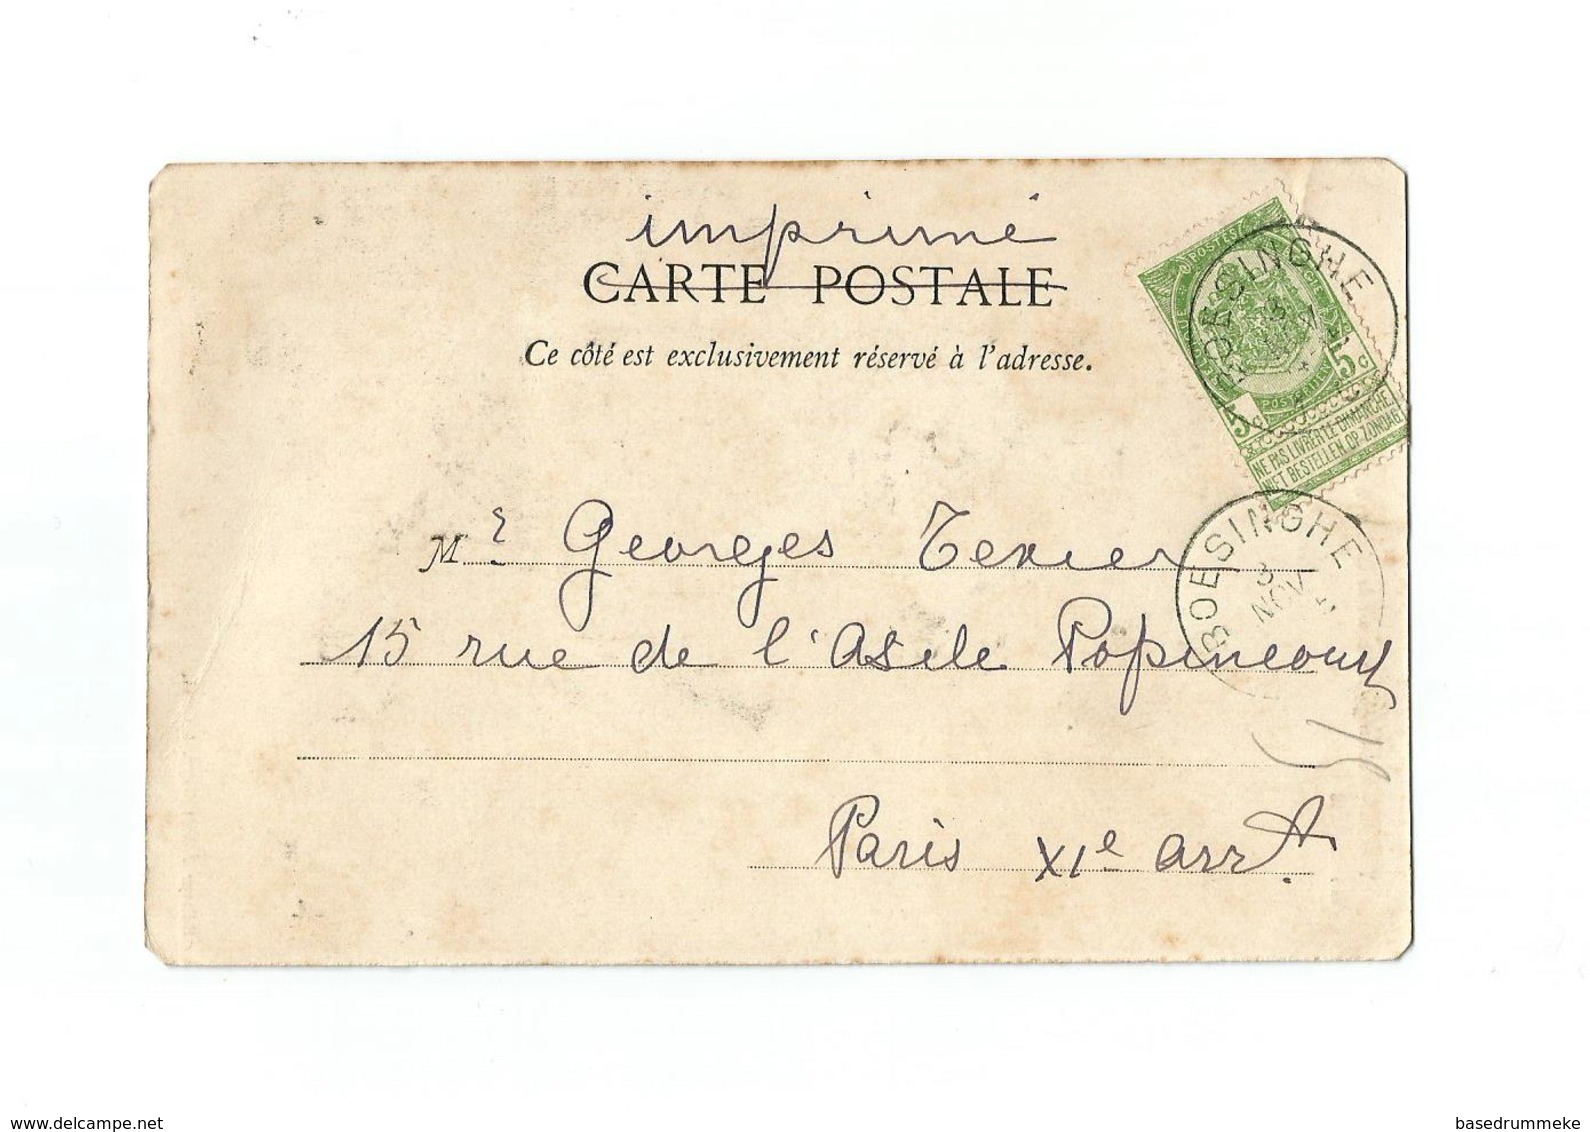 YPRES. - Maison Gothique Rue De Dixmude (1908). - Ieper